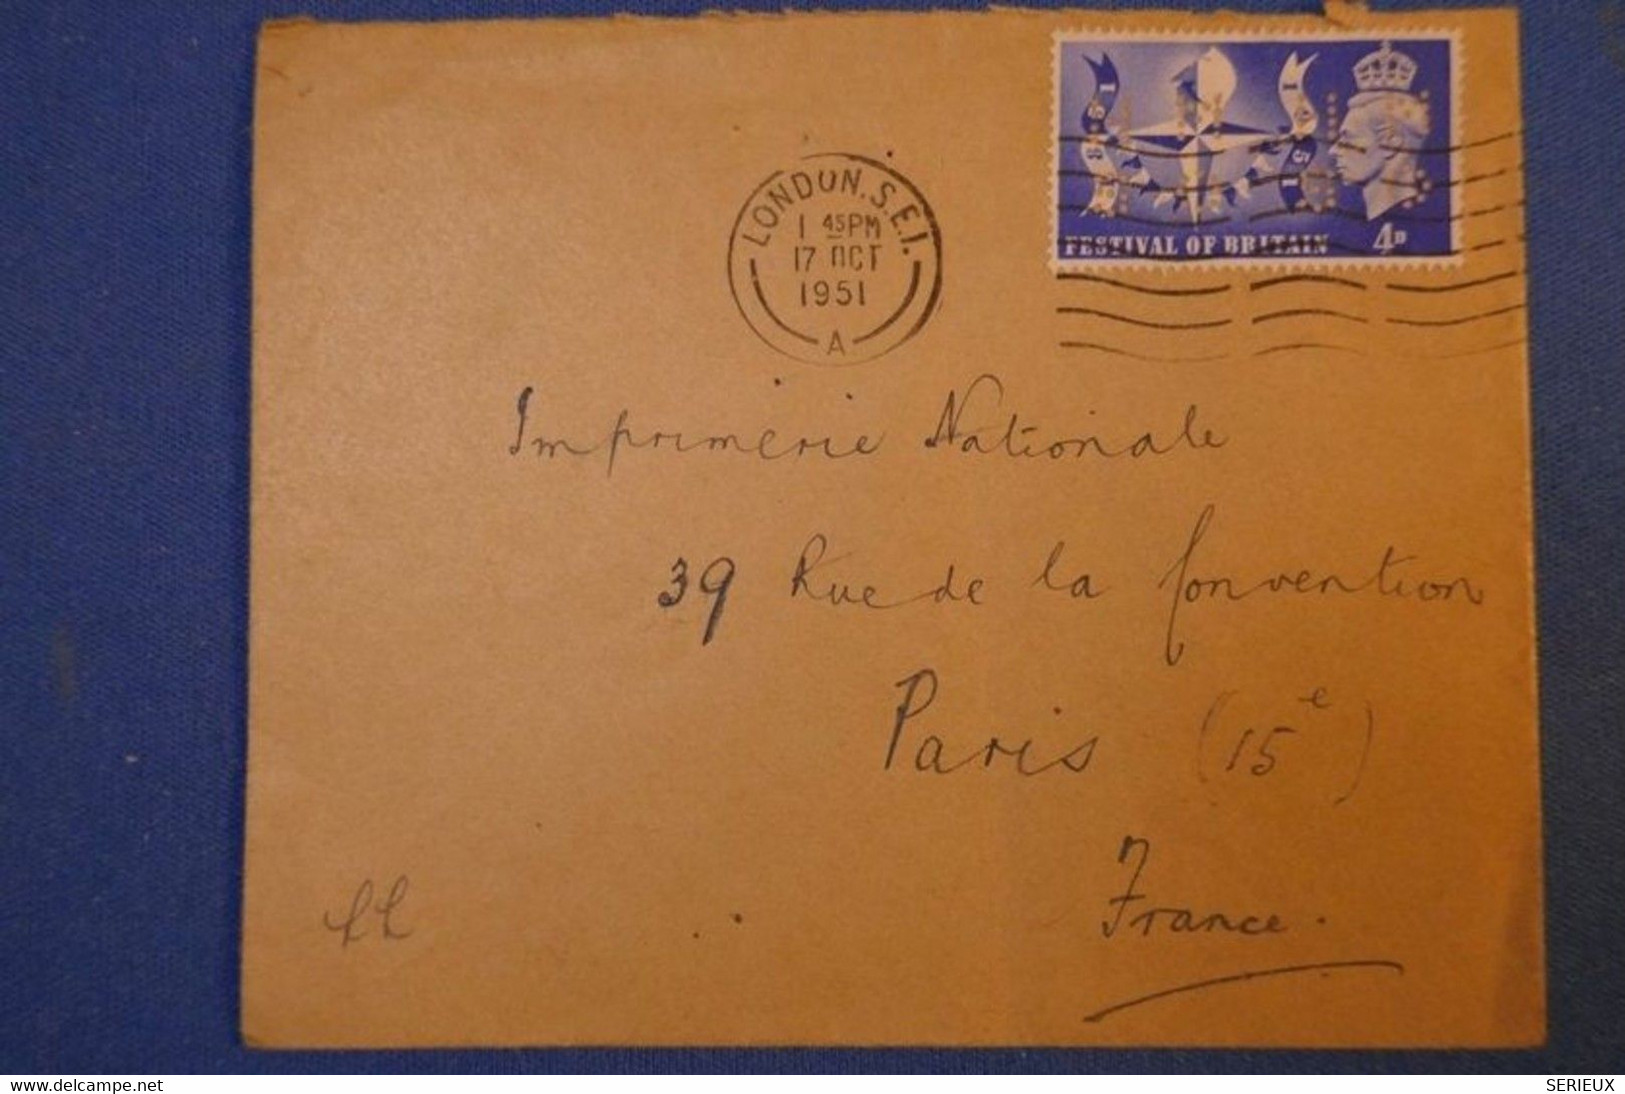 239 GRANDE BRETAGNE LETTRE 1951 DE LONDRES A PARIS R DE LA CONVENTION + TIMBRES PERFORATIONS PERFORATED - Briefe U. Dokumente